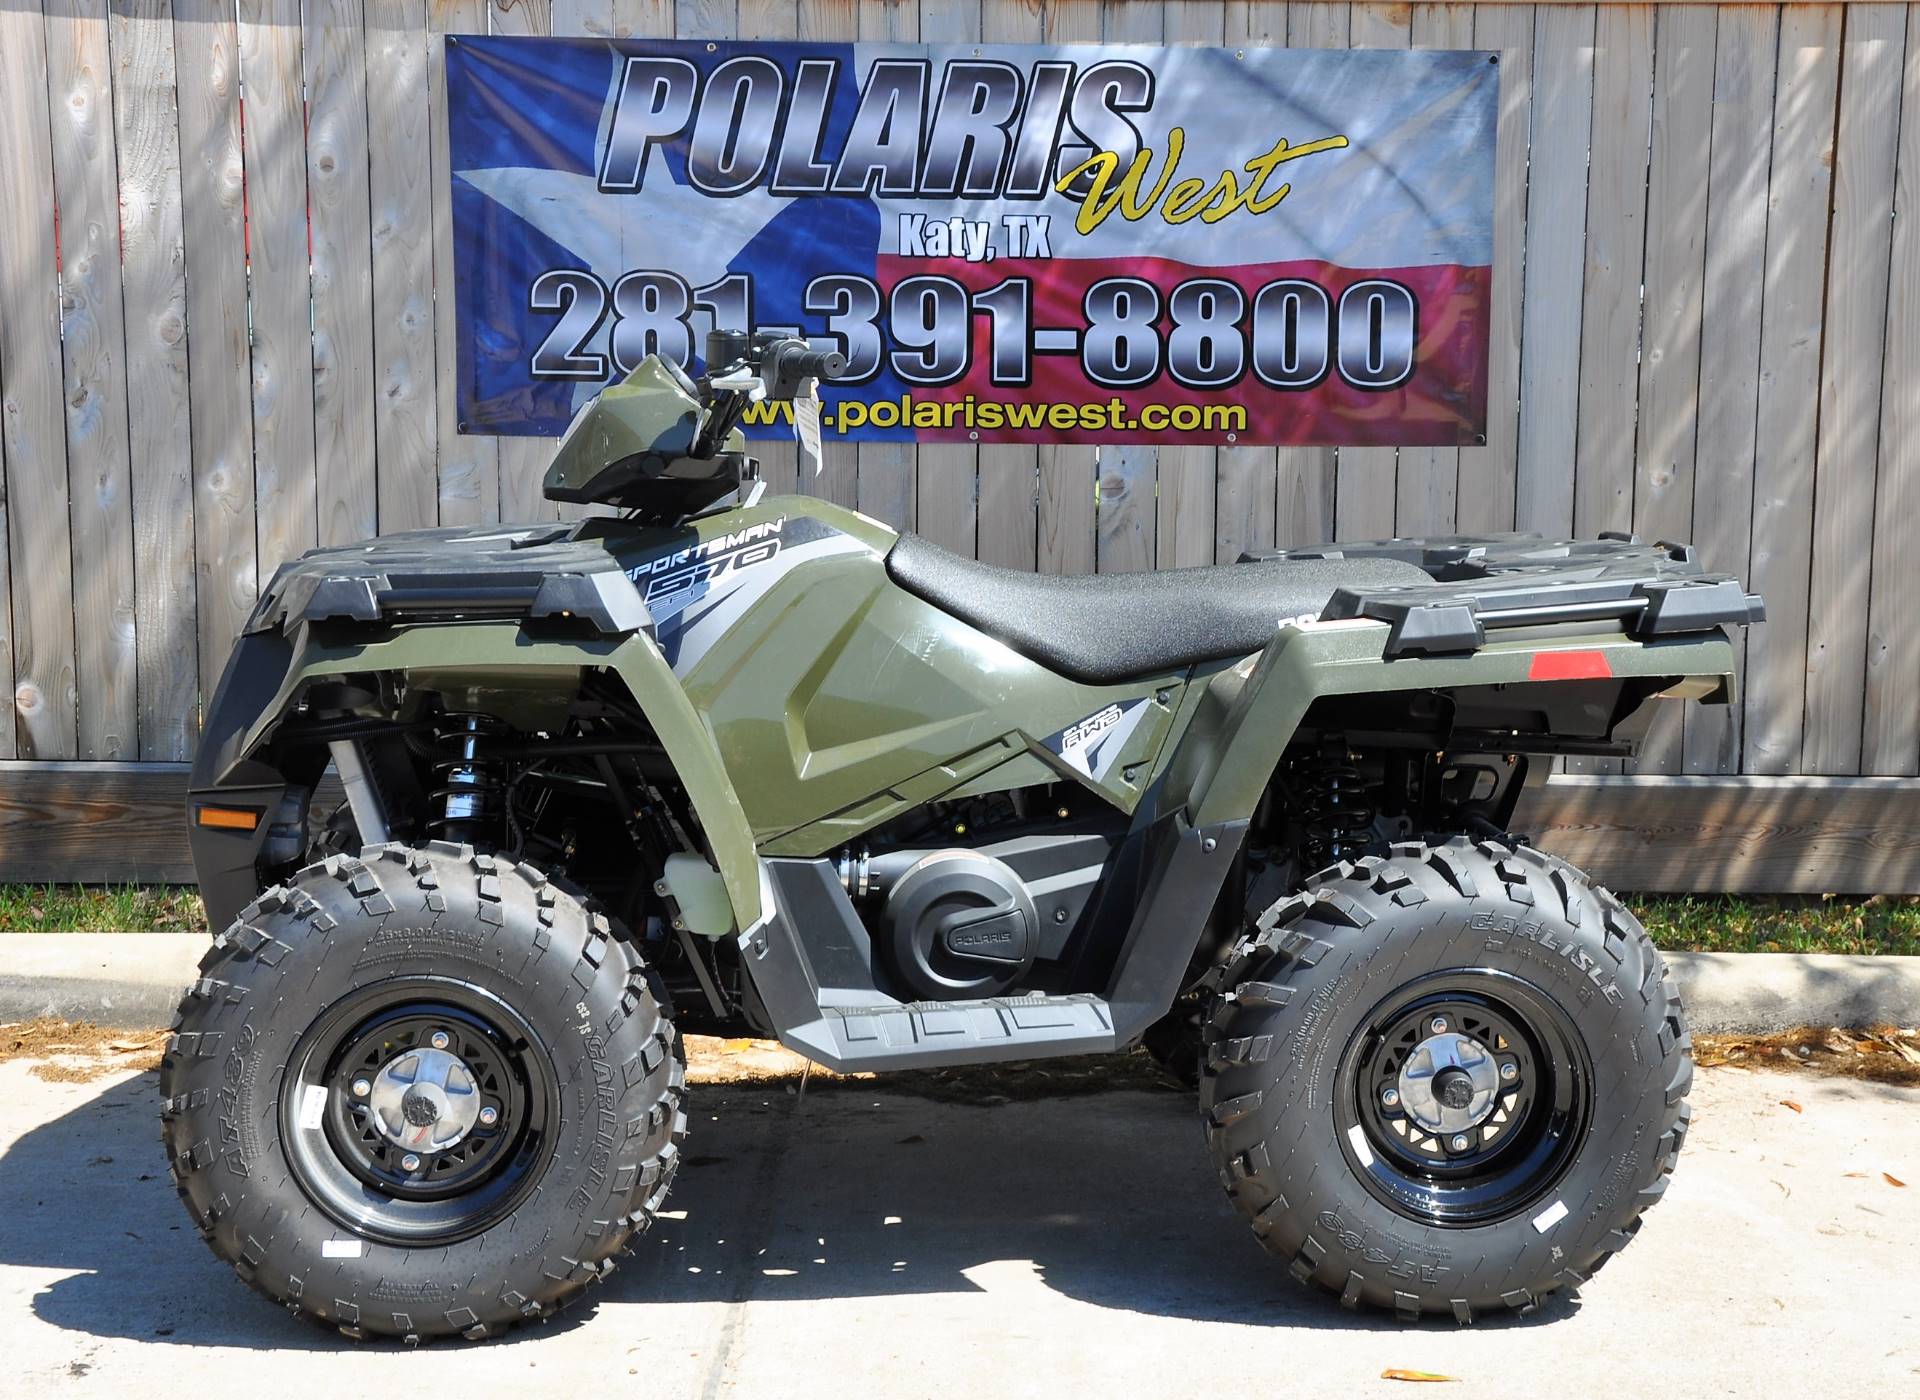 New 2018 Polaris Sportsman 570 ATVs in Katy, TX | Stock Number ...